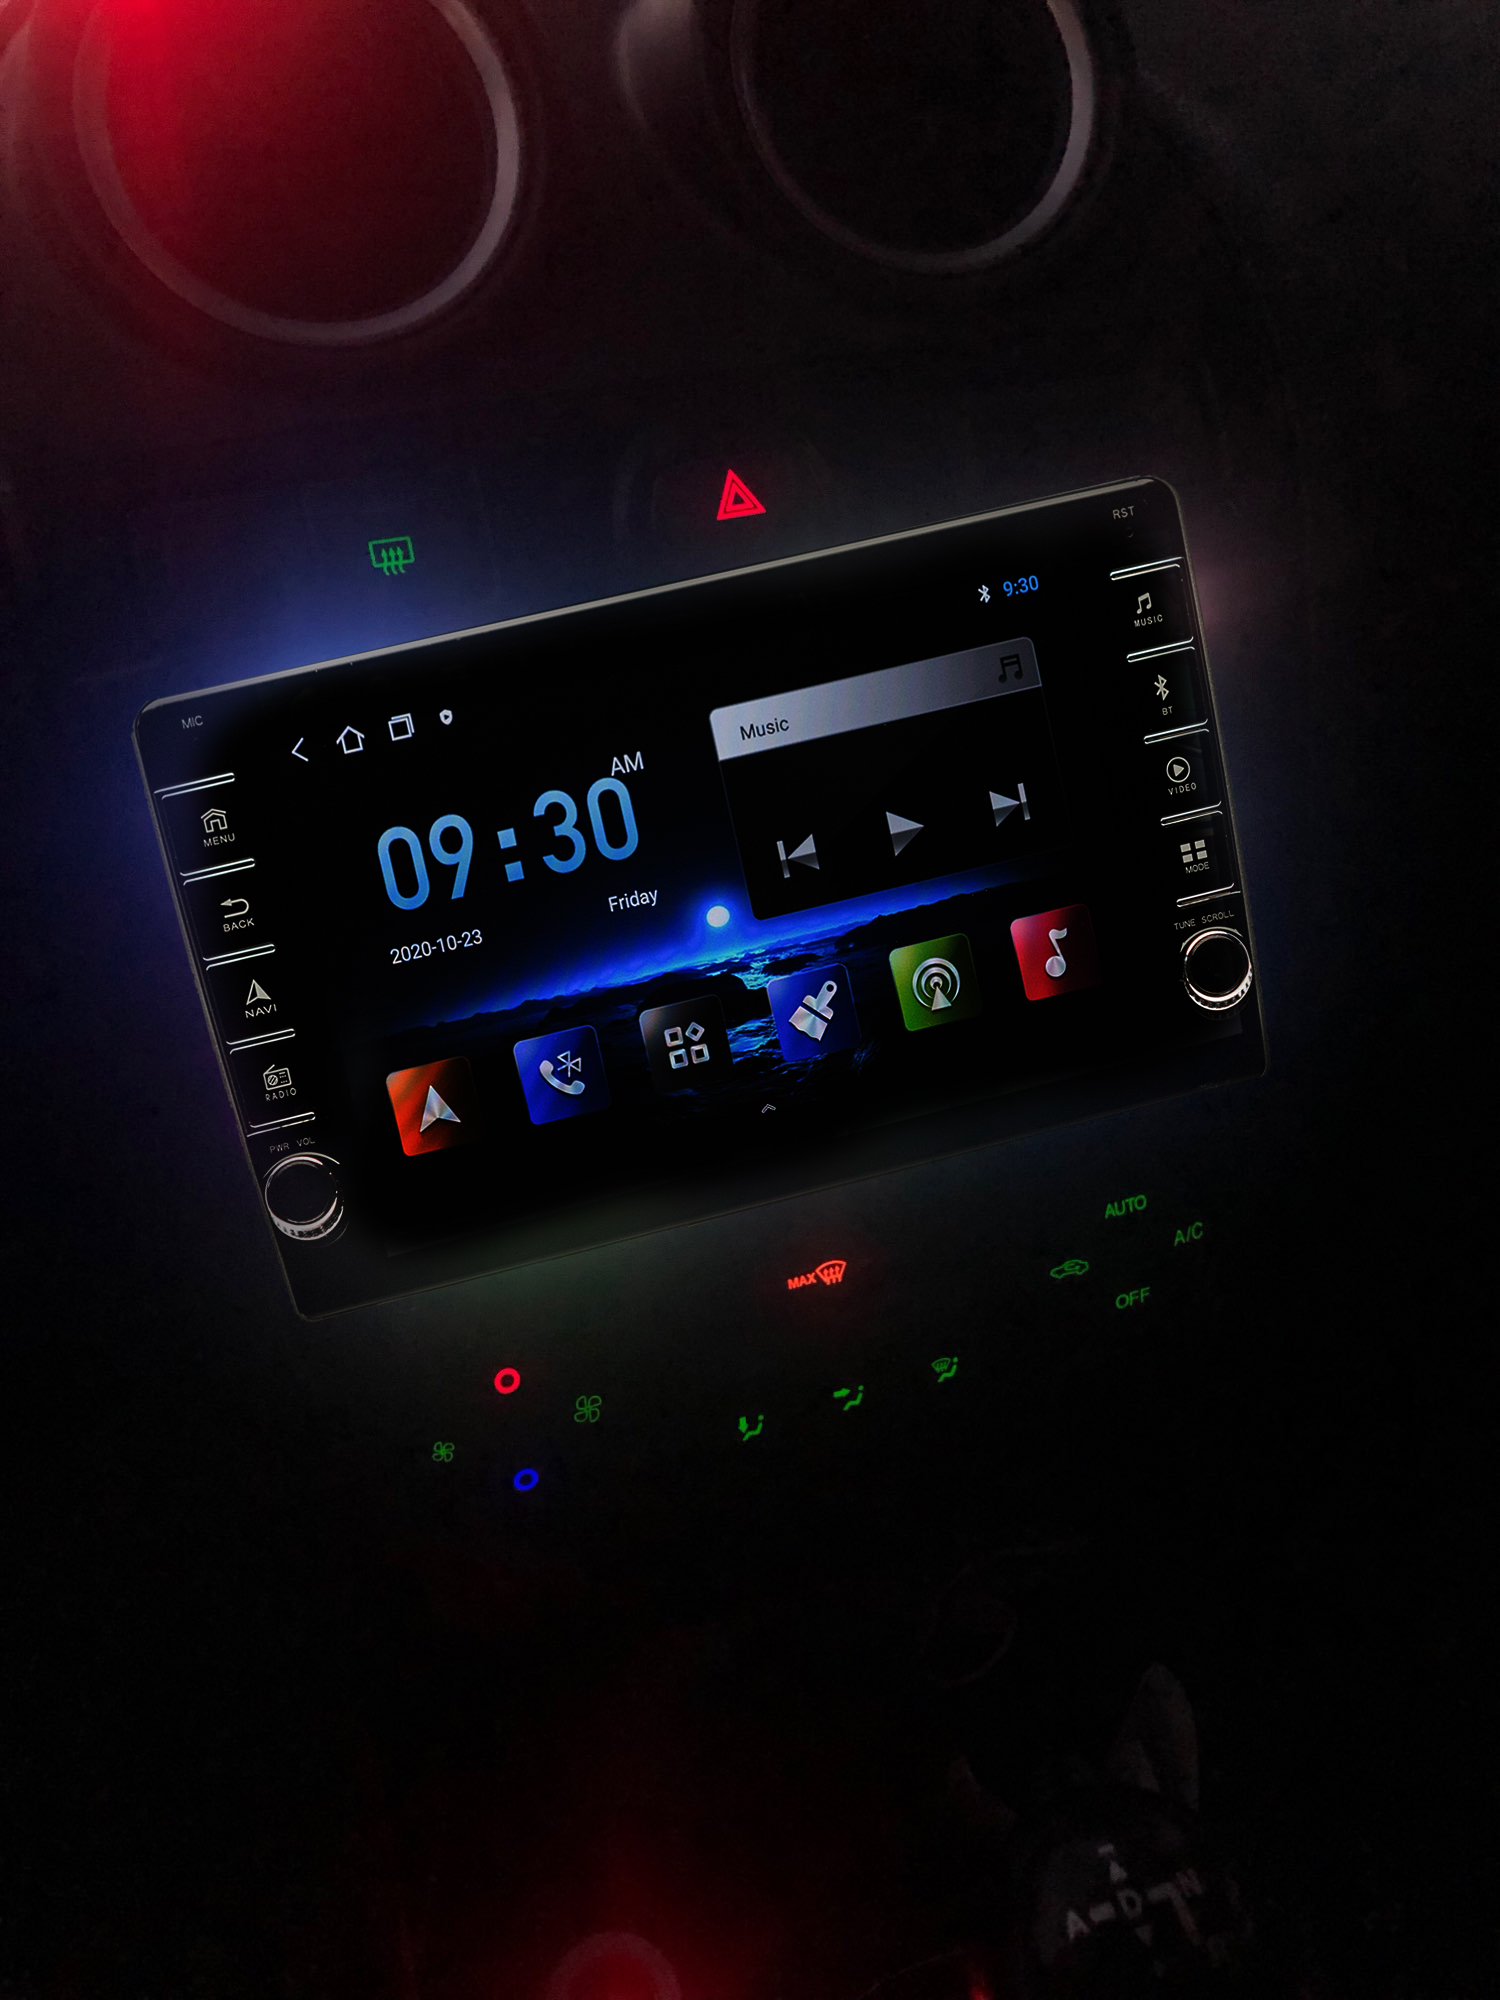 Navigatie AUTONAV ECO Android GPS Dedicata Ford Fiesta 2002-2008, Model PRO Memorie 16GB Stocare, 1GB DDR3 RAM, Display 8" Full-Touch, WiFi, 2 x USB, Bluetooth, Quad-Core 4 * 1.3GHz, 4 * 50W Audio